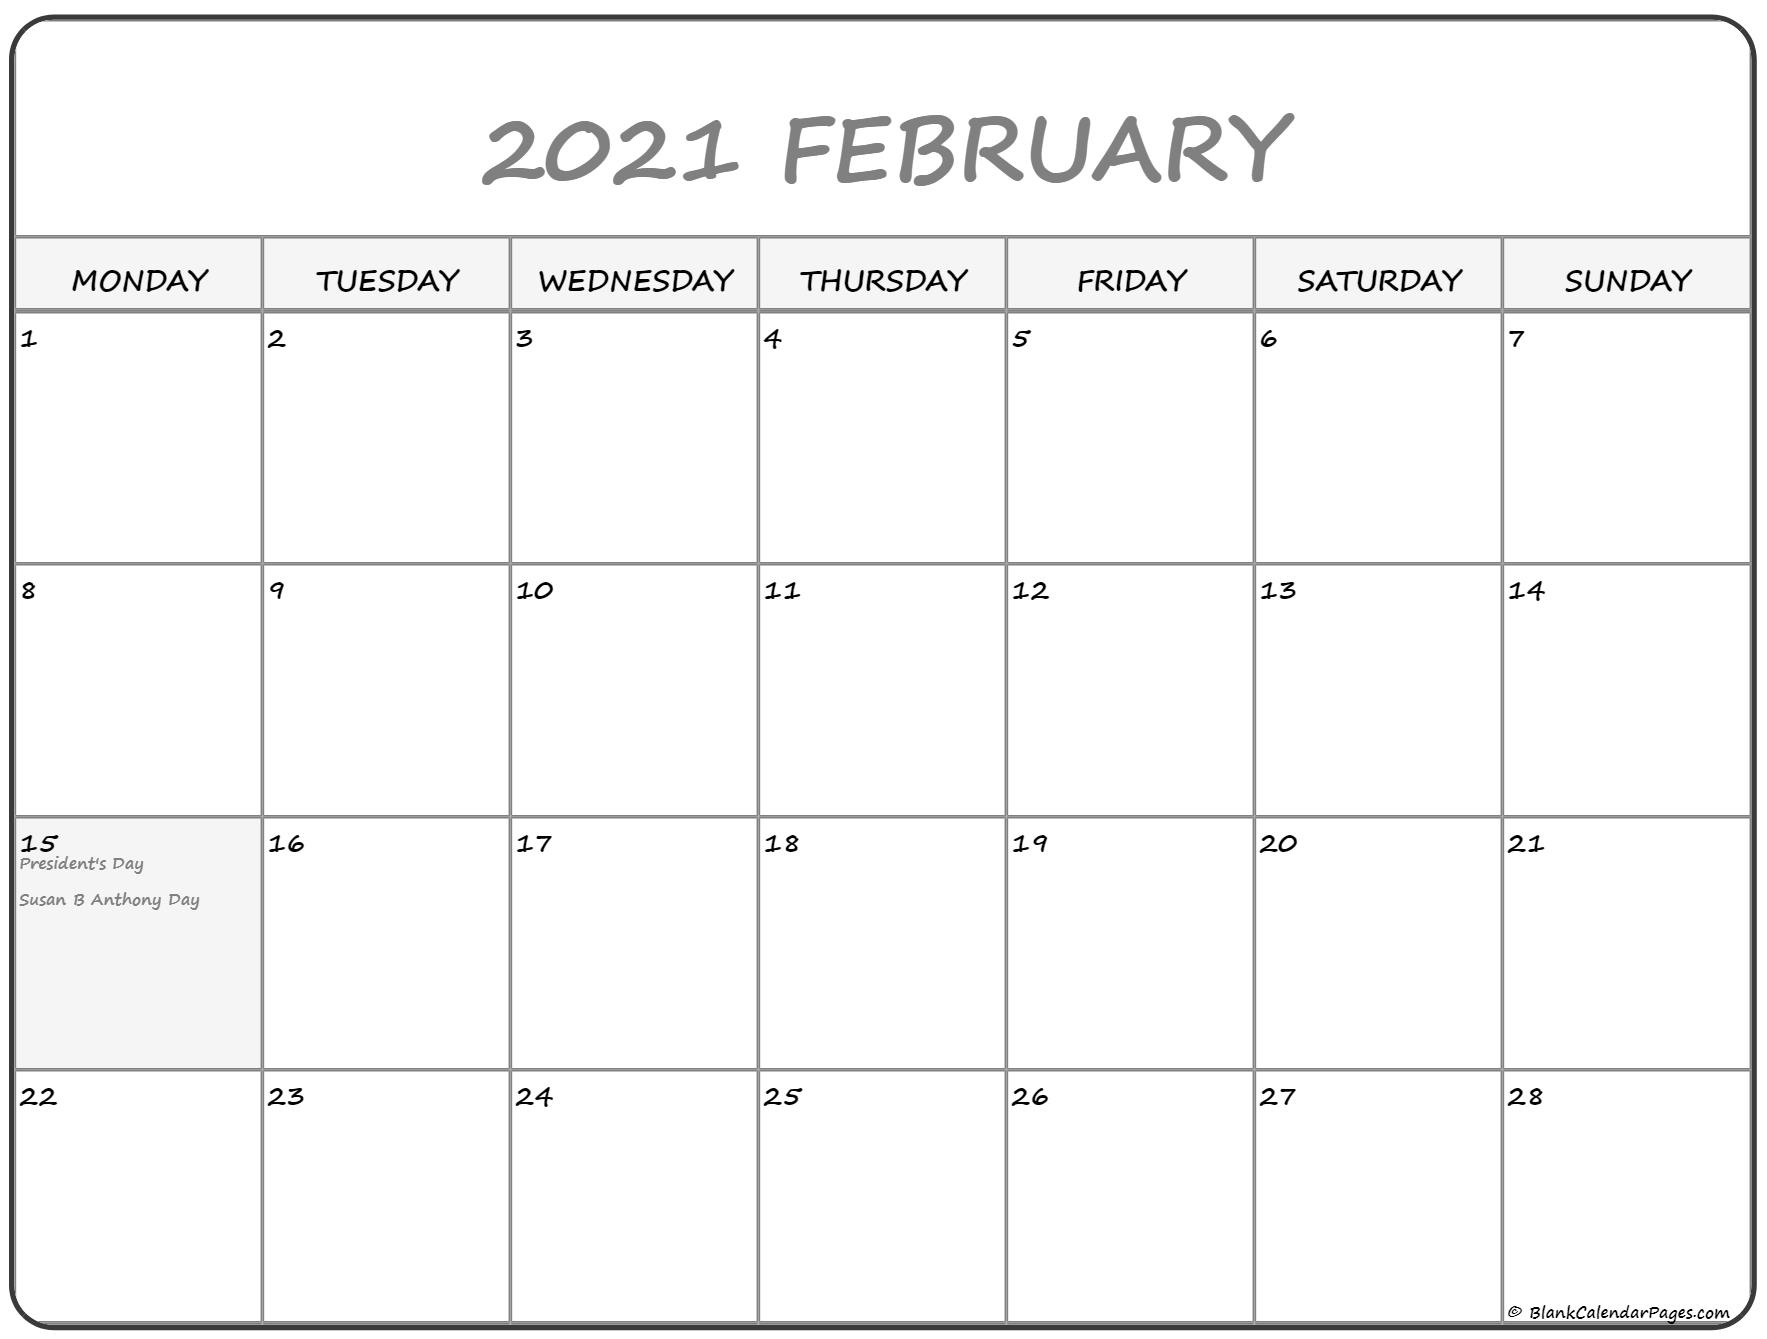 February 2021 Monday Calendar | Monday To Sunday